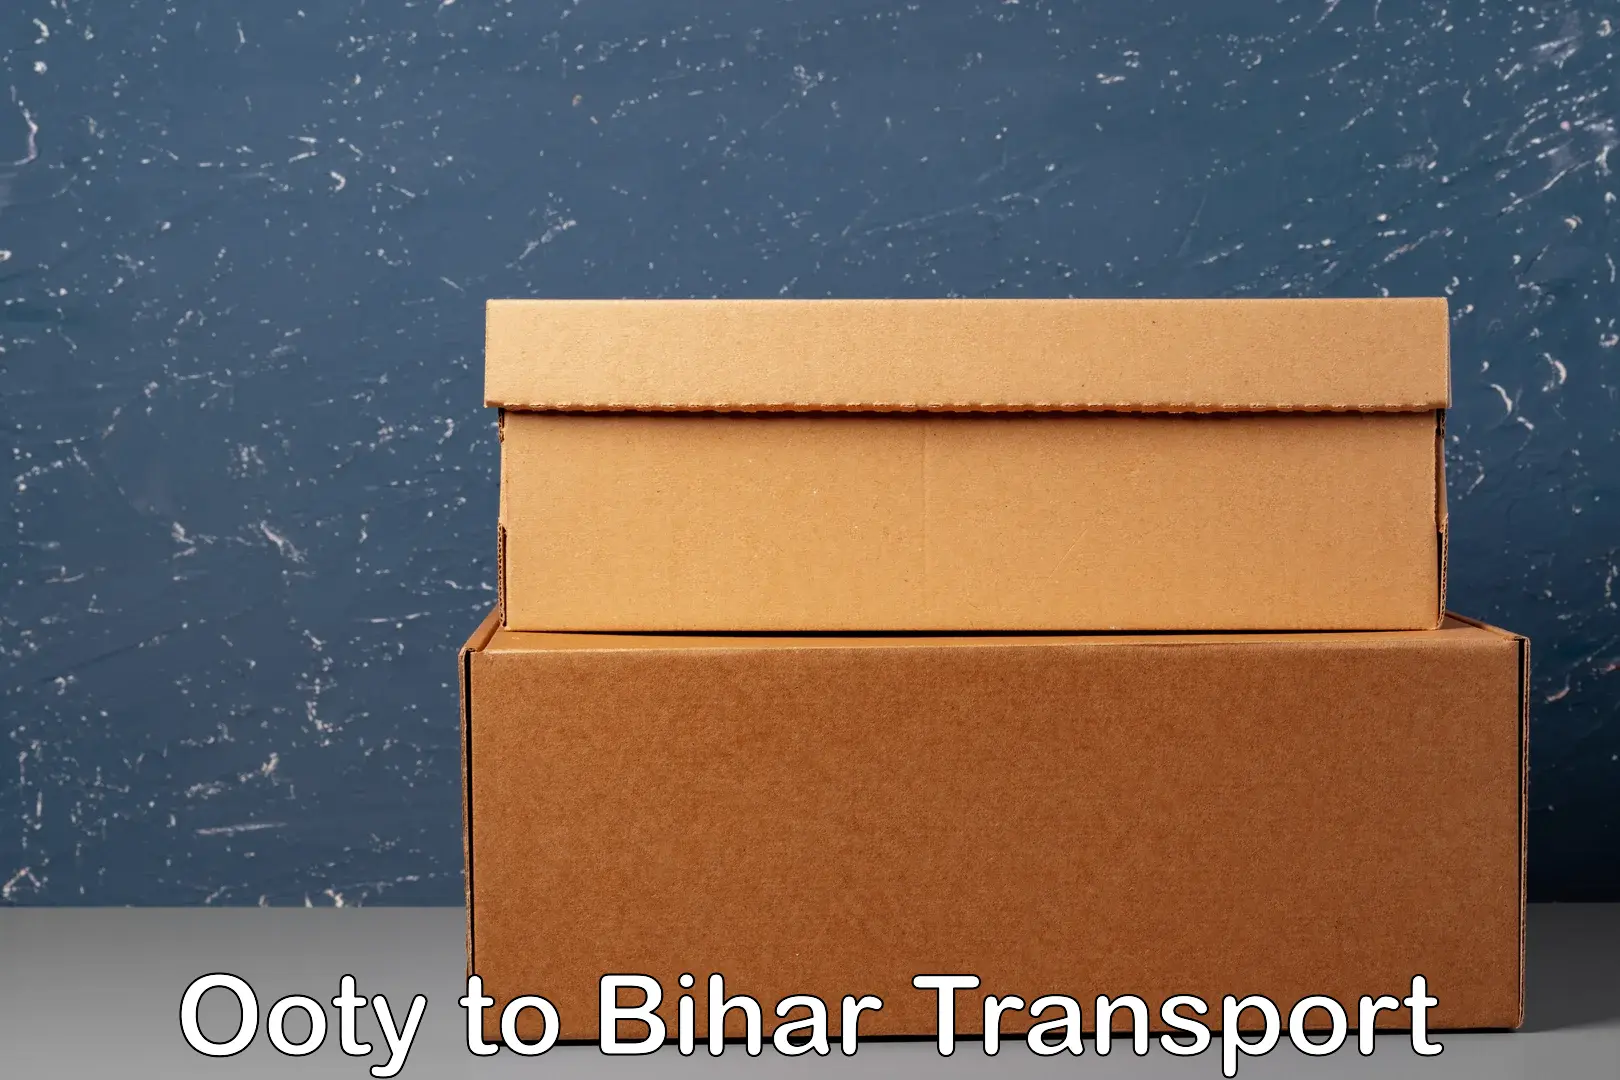 Bike transport service Ooty to Bihar